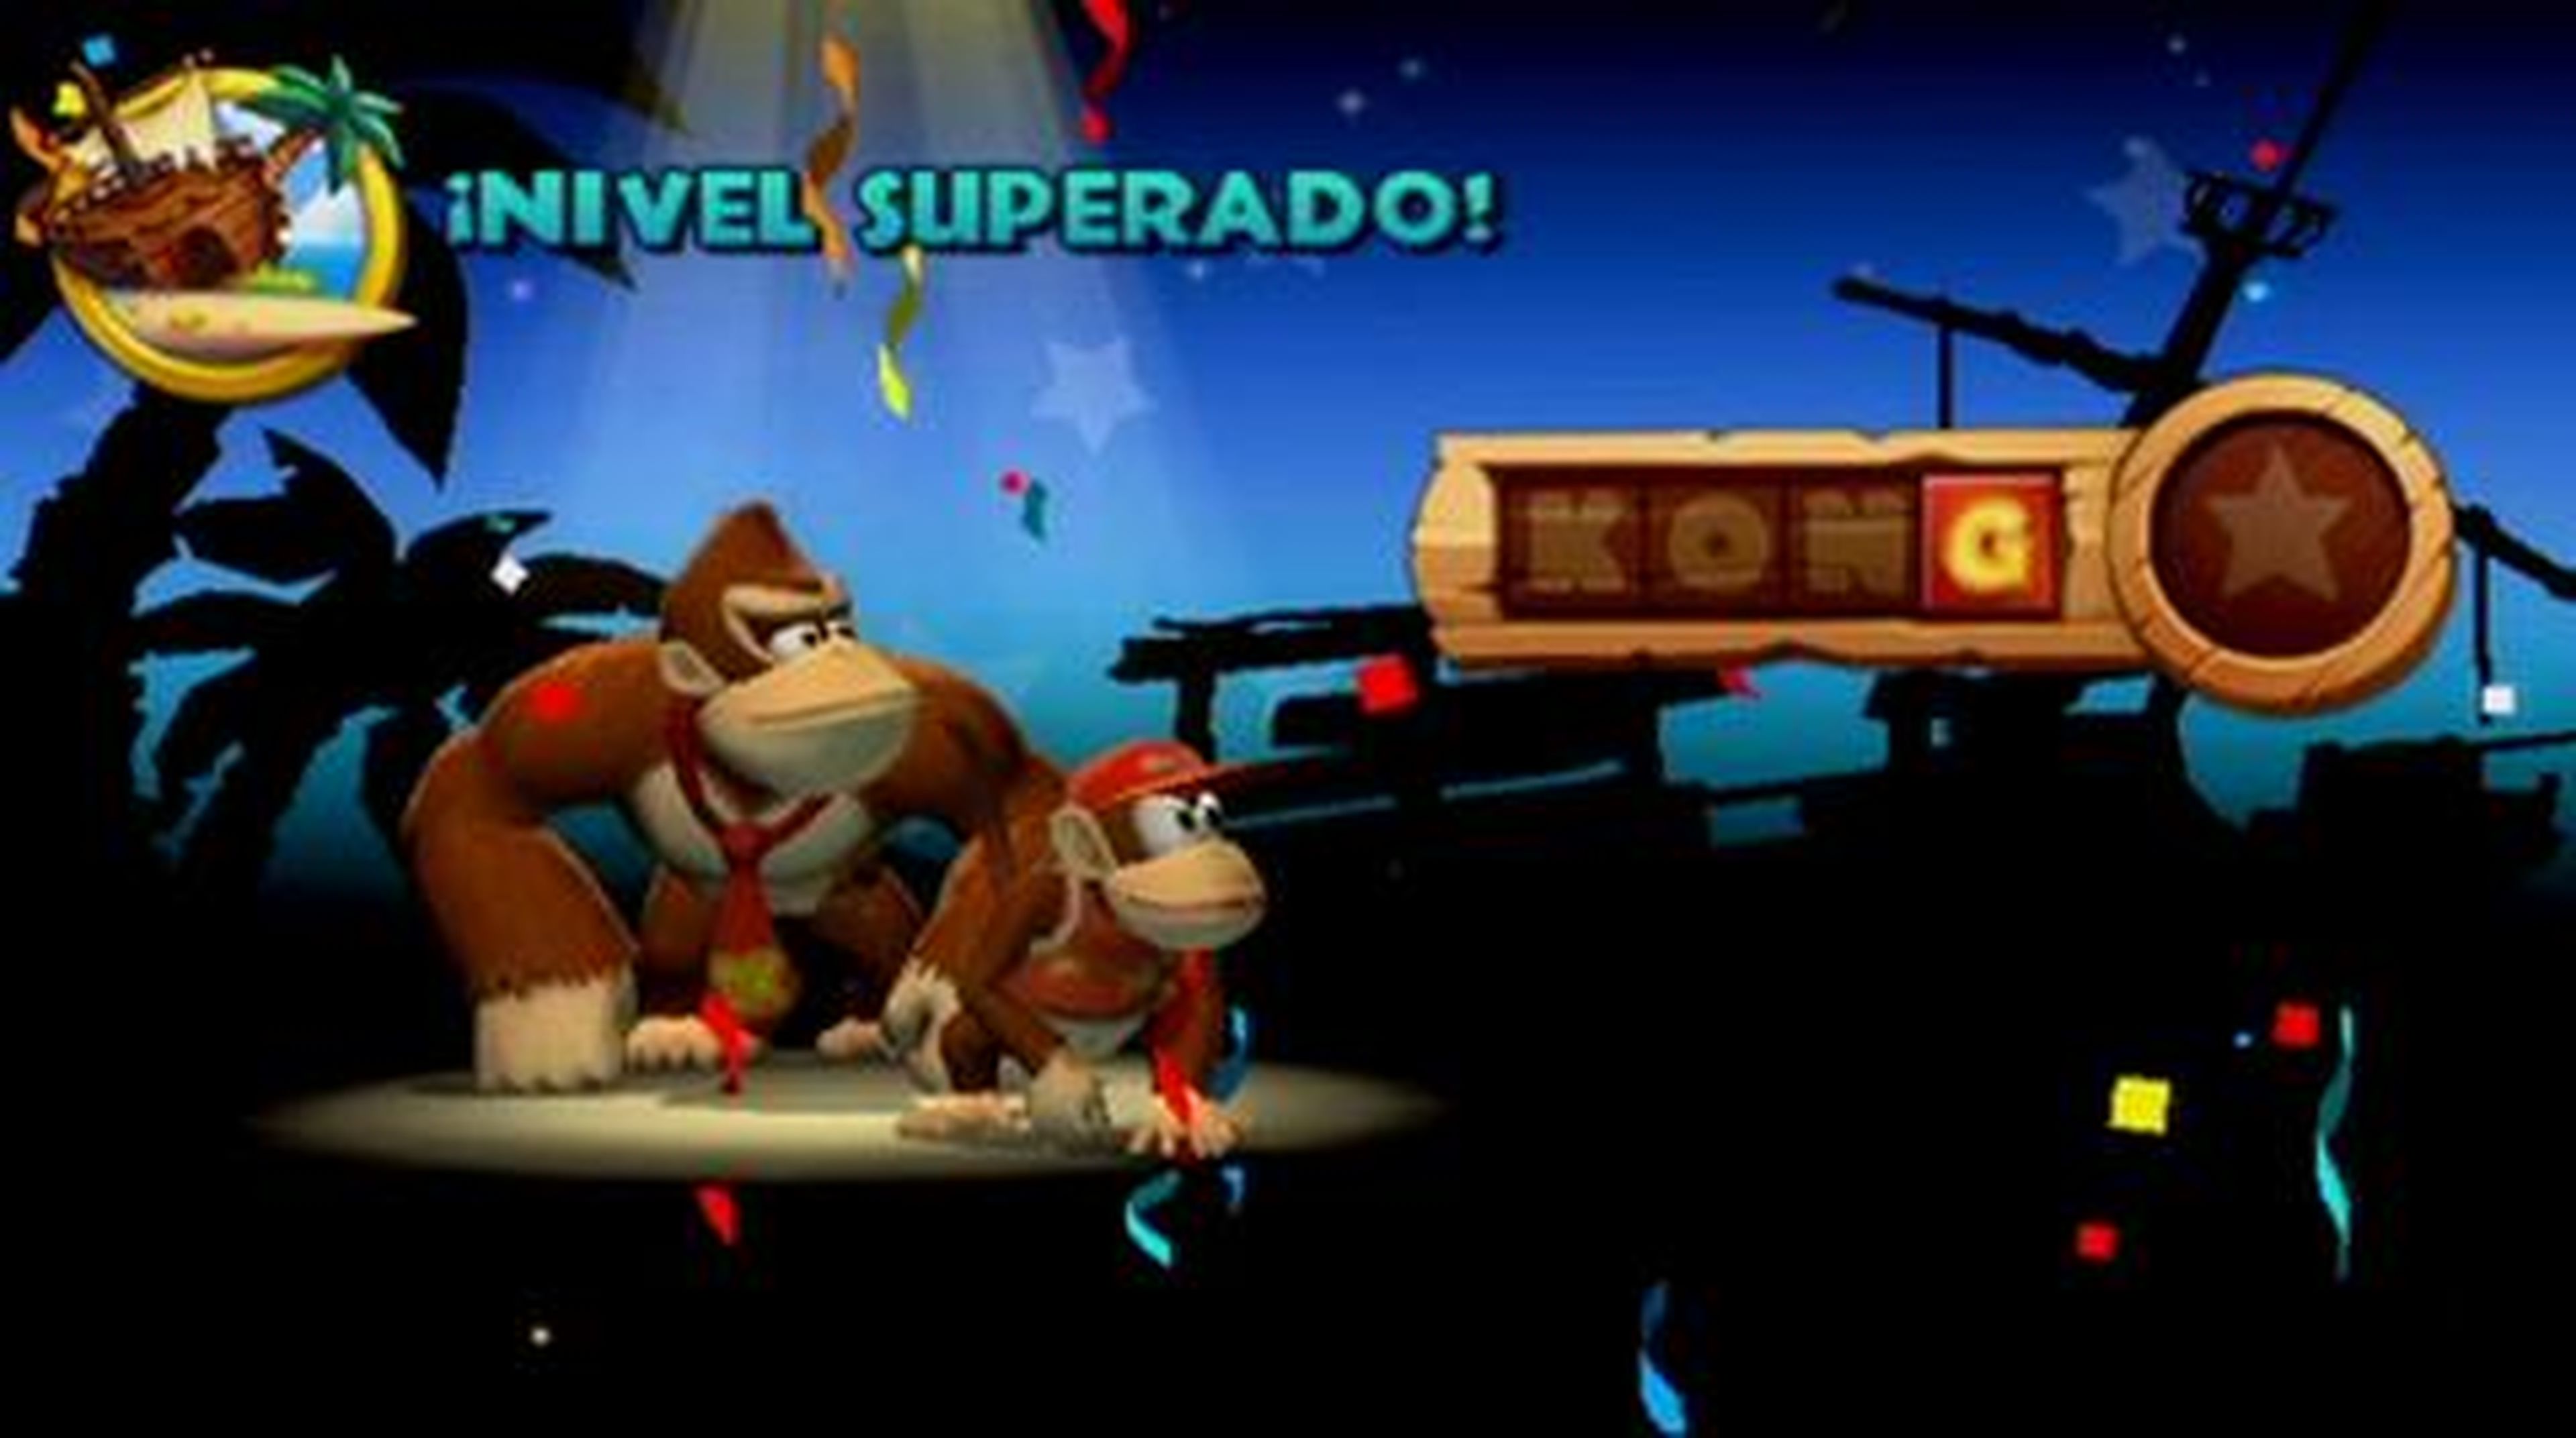 Videoreview de Donkey Kong Country Returns en HobbyNews.es